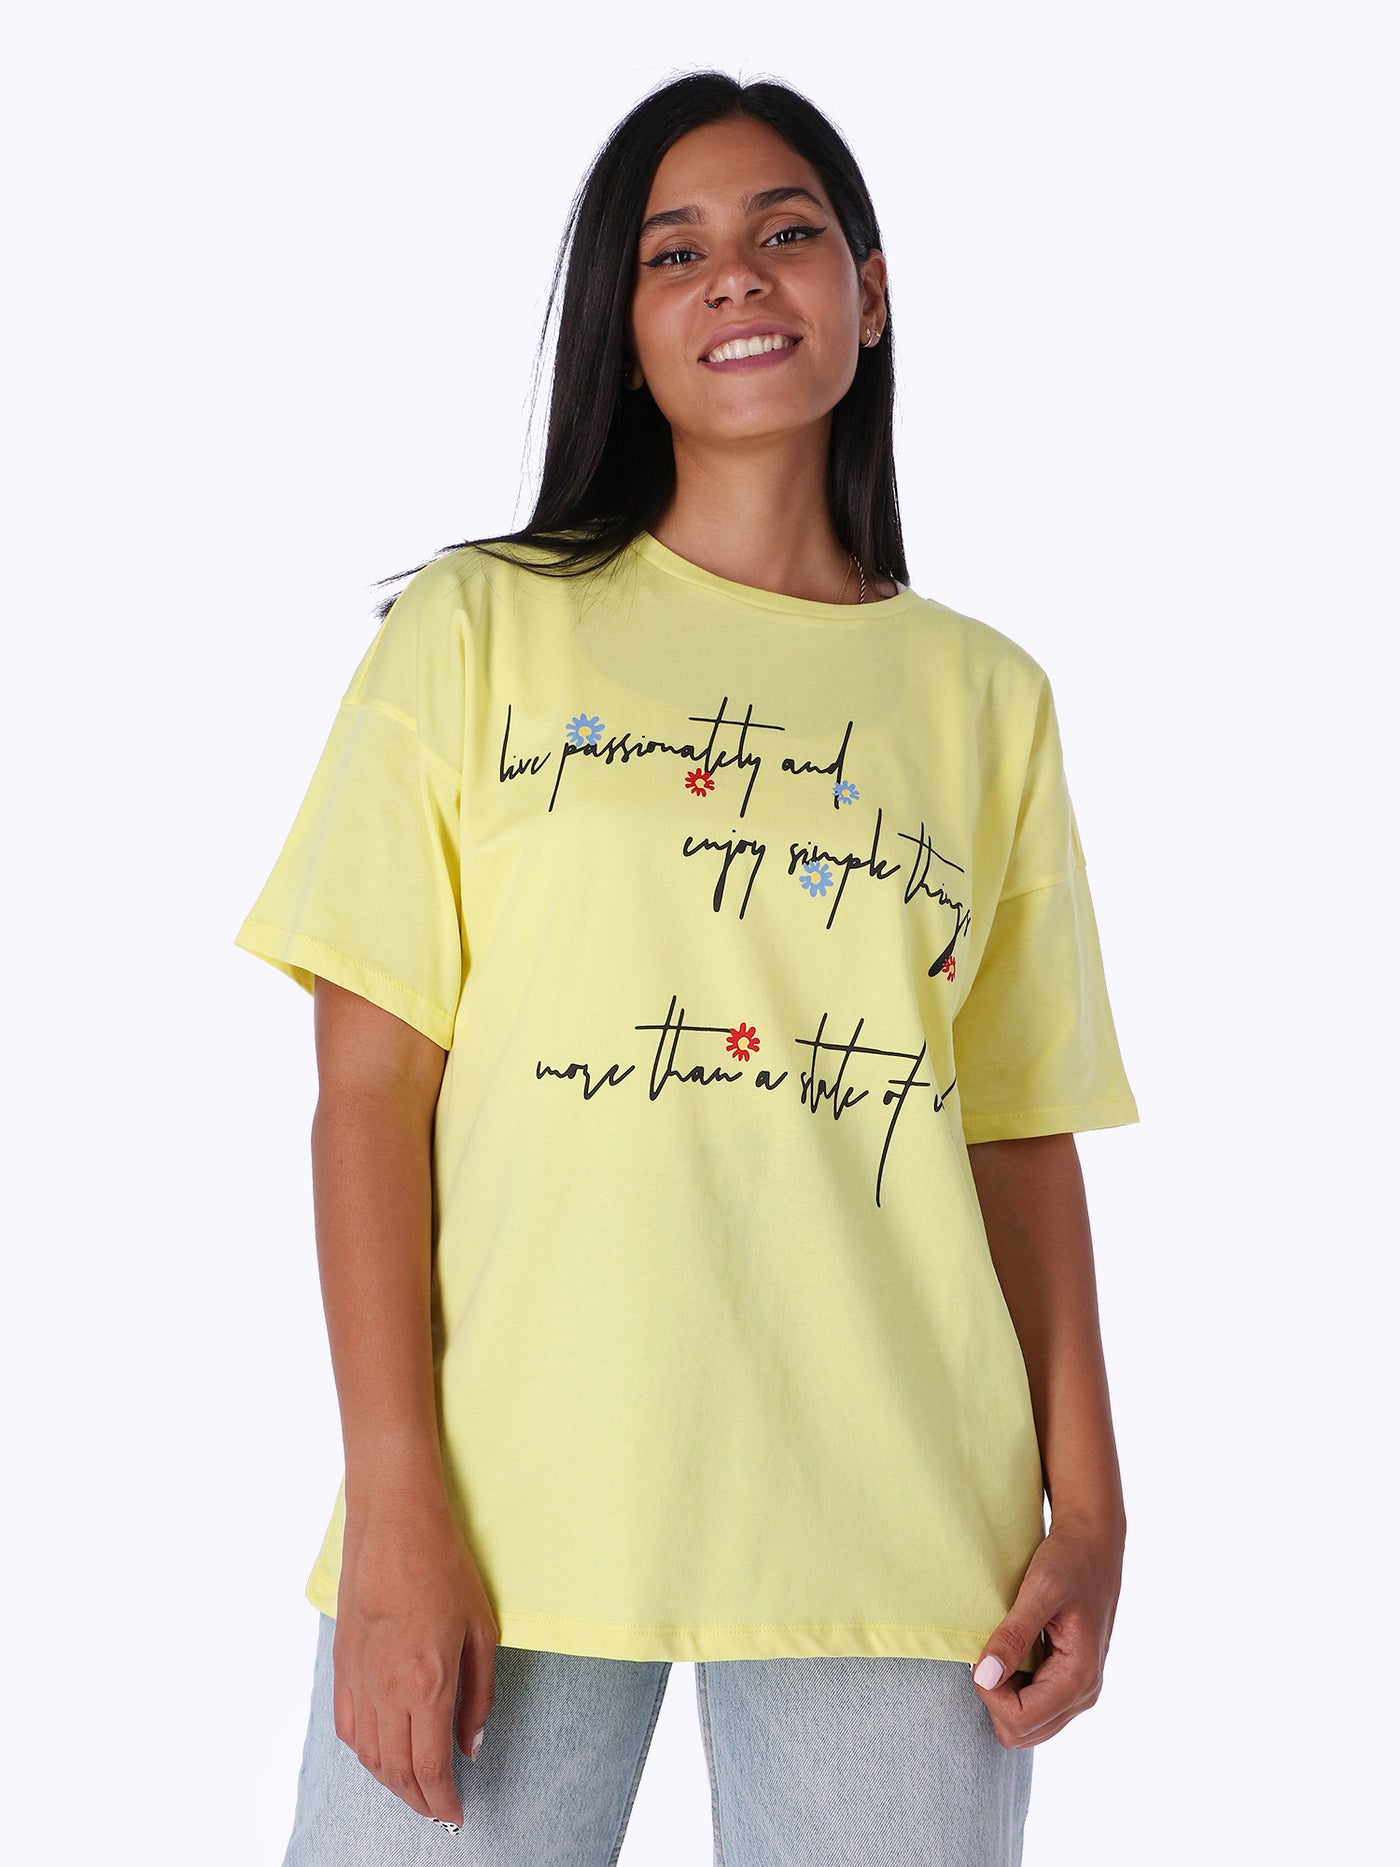 OR Women's Printed T-Shirt